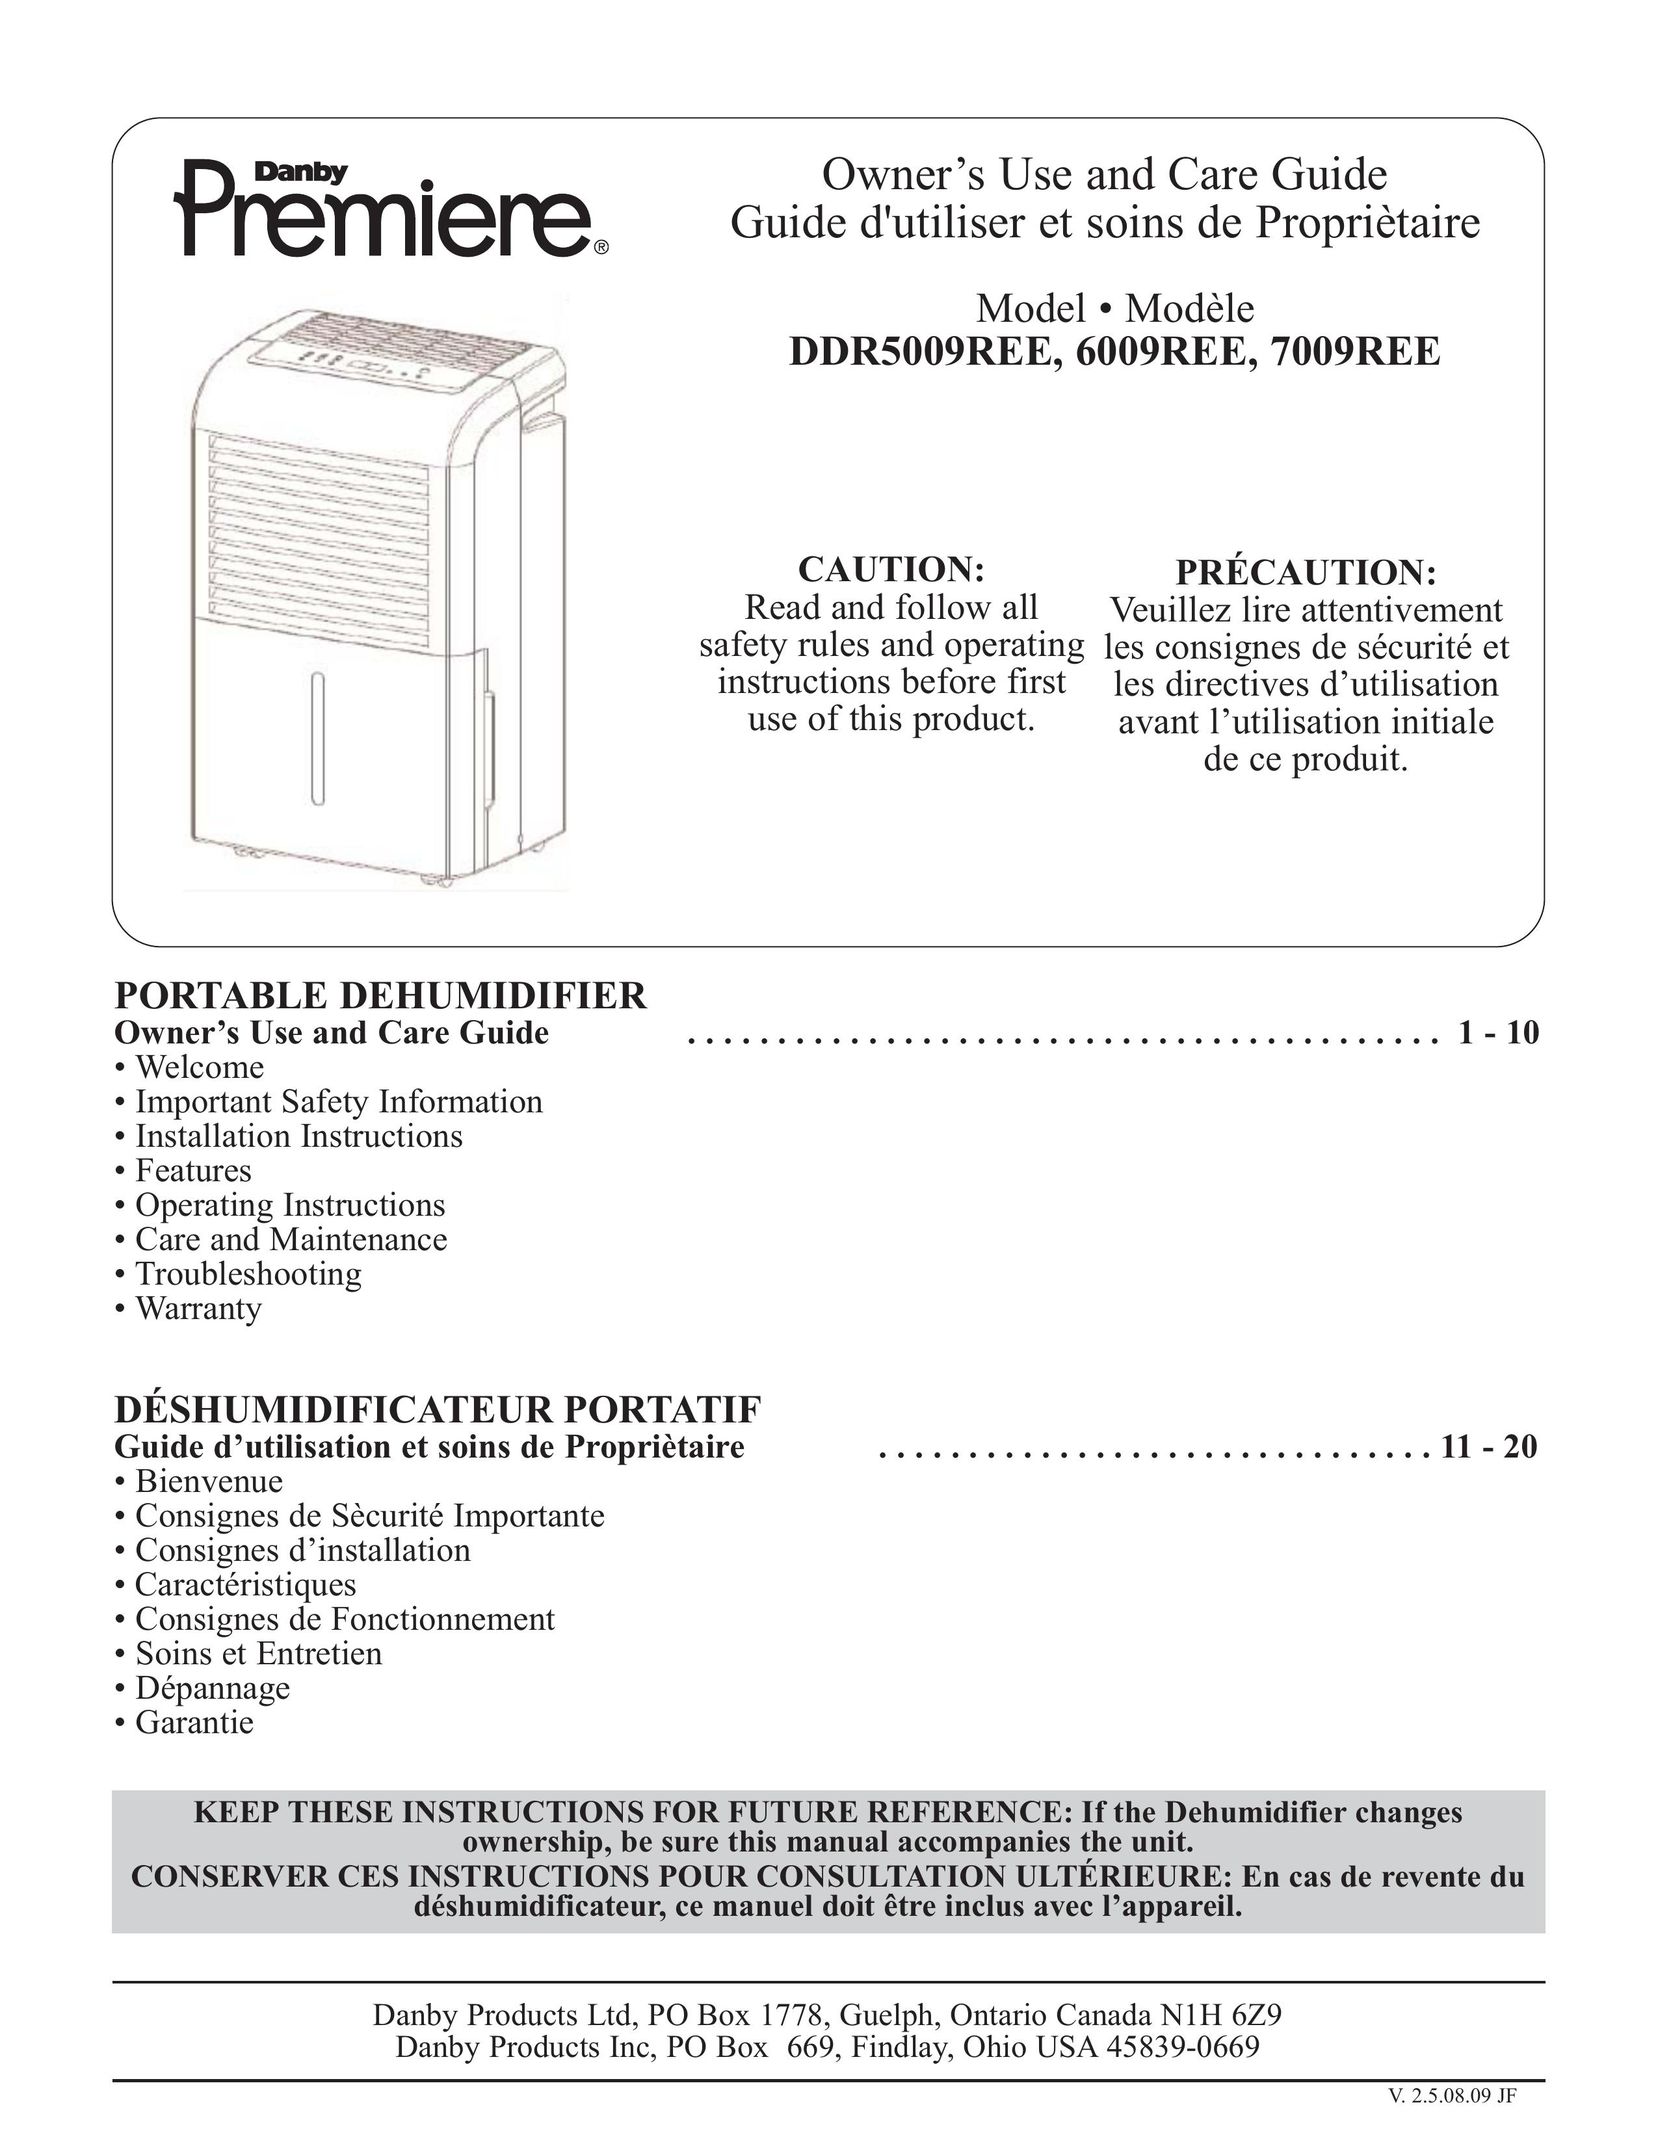 Danby 6009REE Dehumidifier User Manual